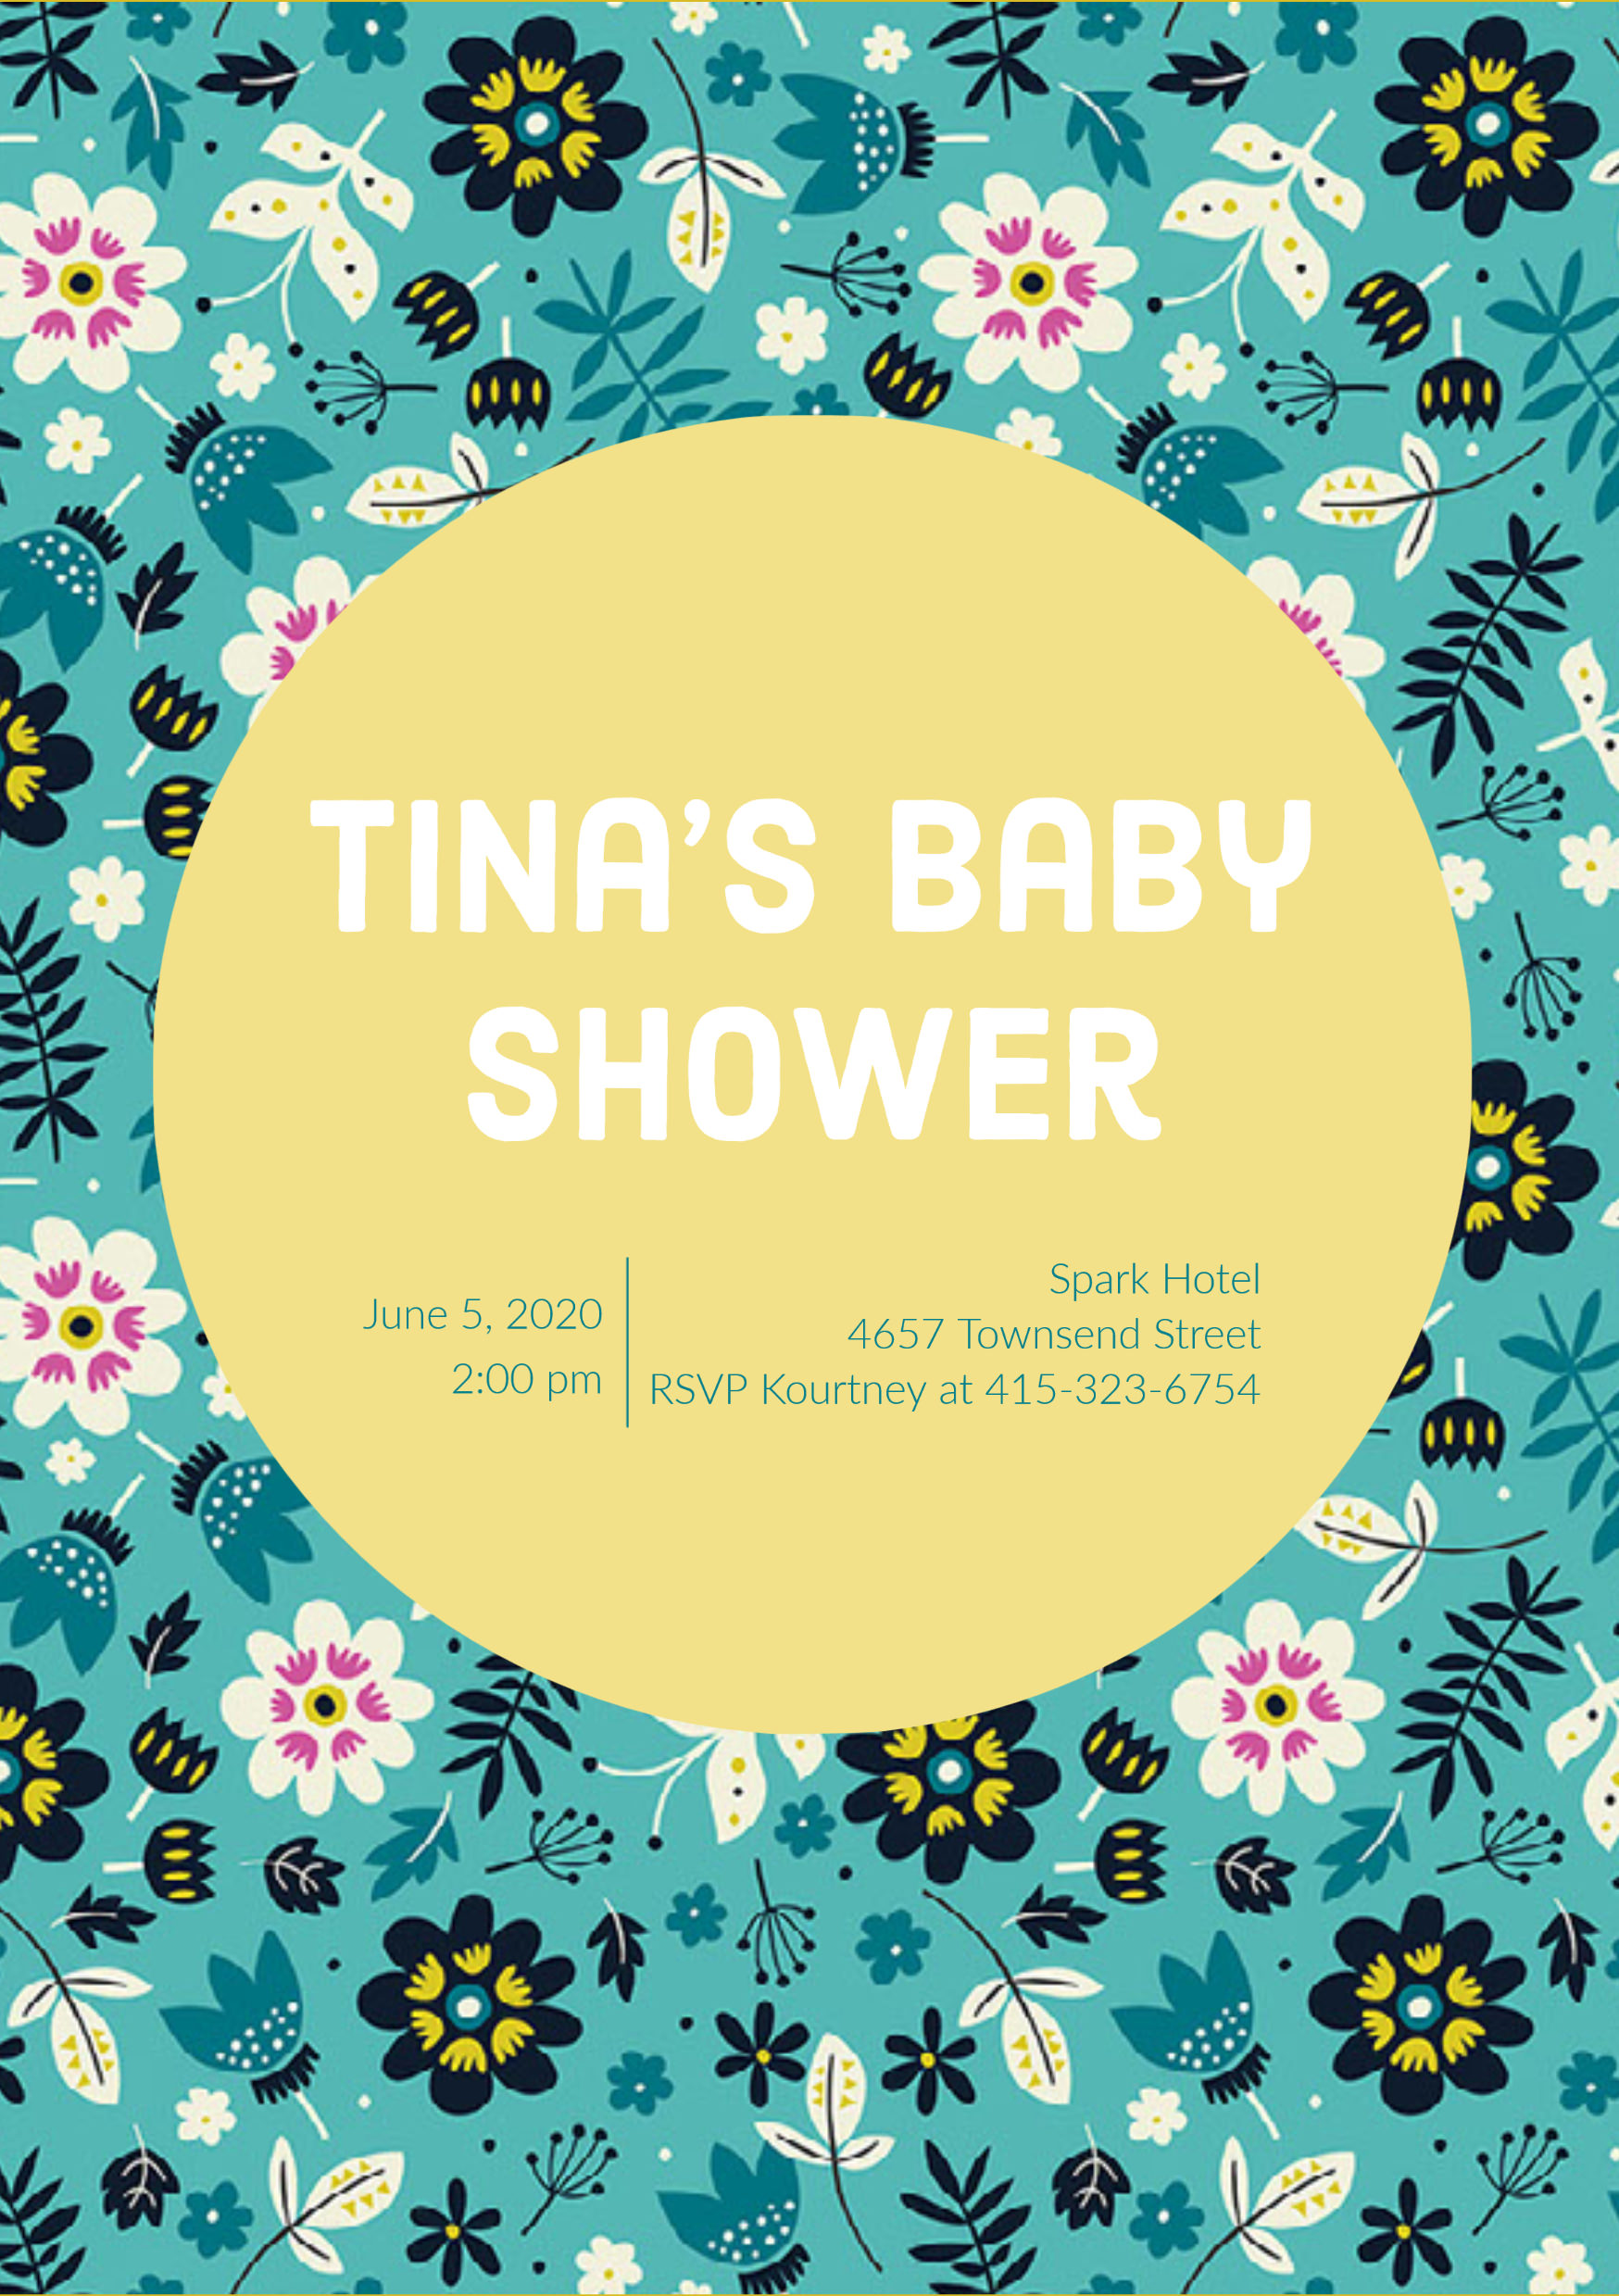 12 Free Editable Baby Shower Invitation Card Templates